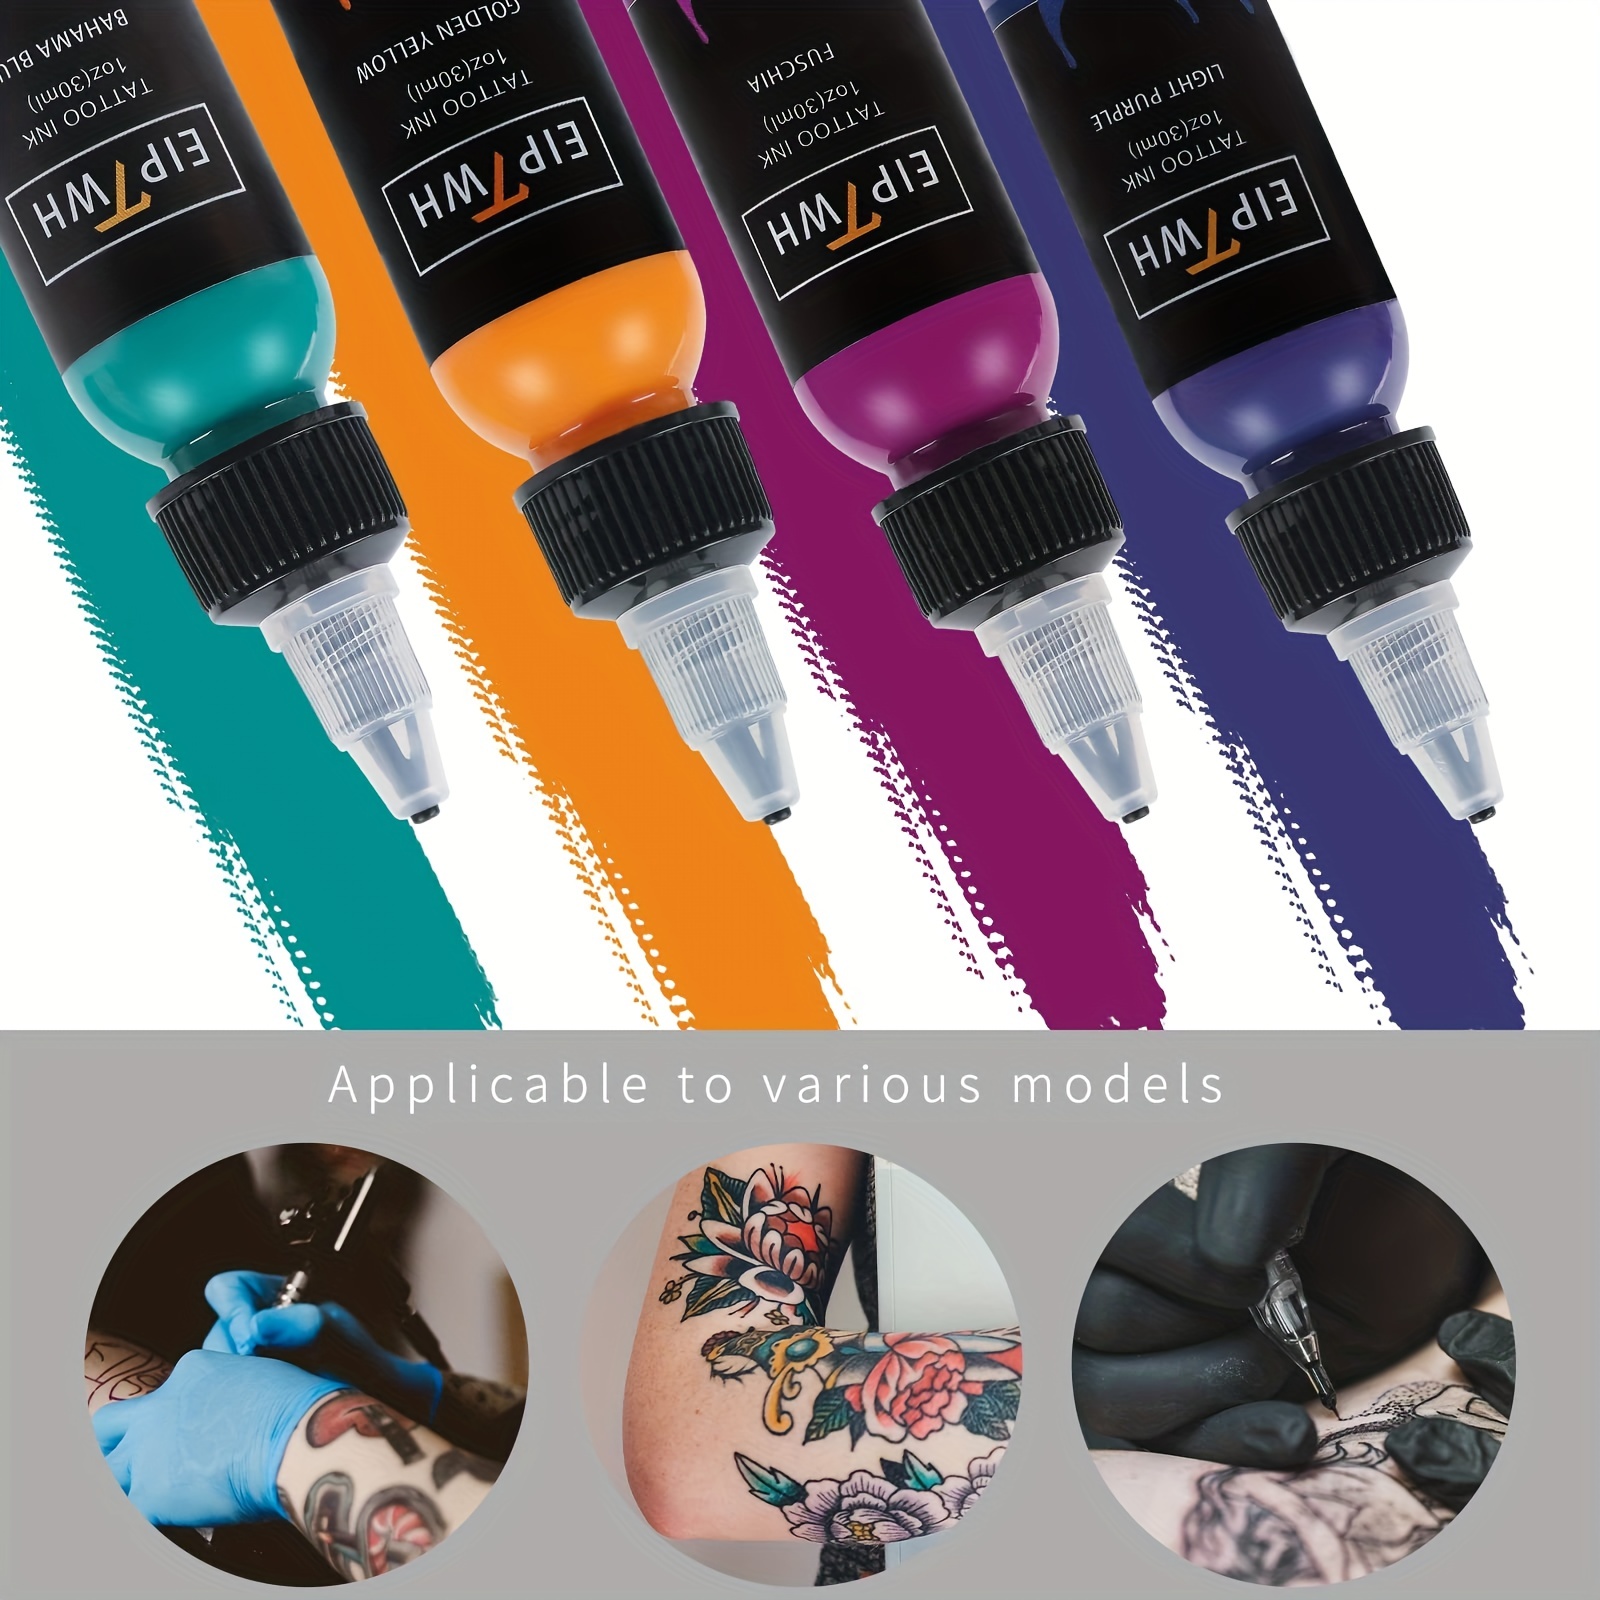 BaodeLi 14PCS Tattoo Ink Colors Set, 1oz (30ml) Tattoo Inks